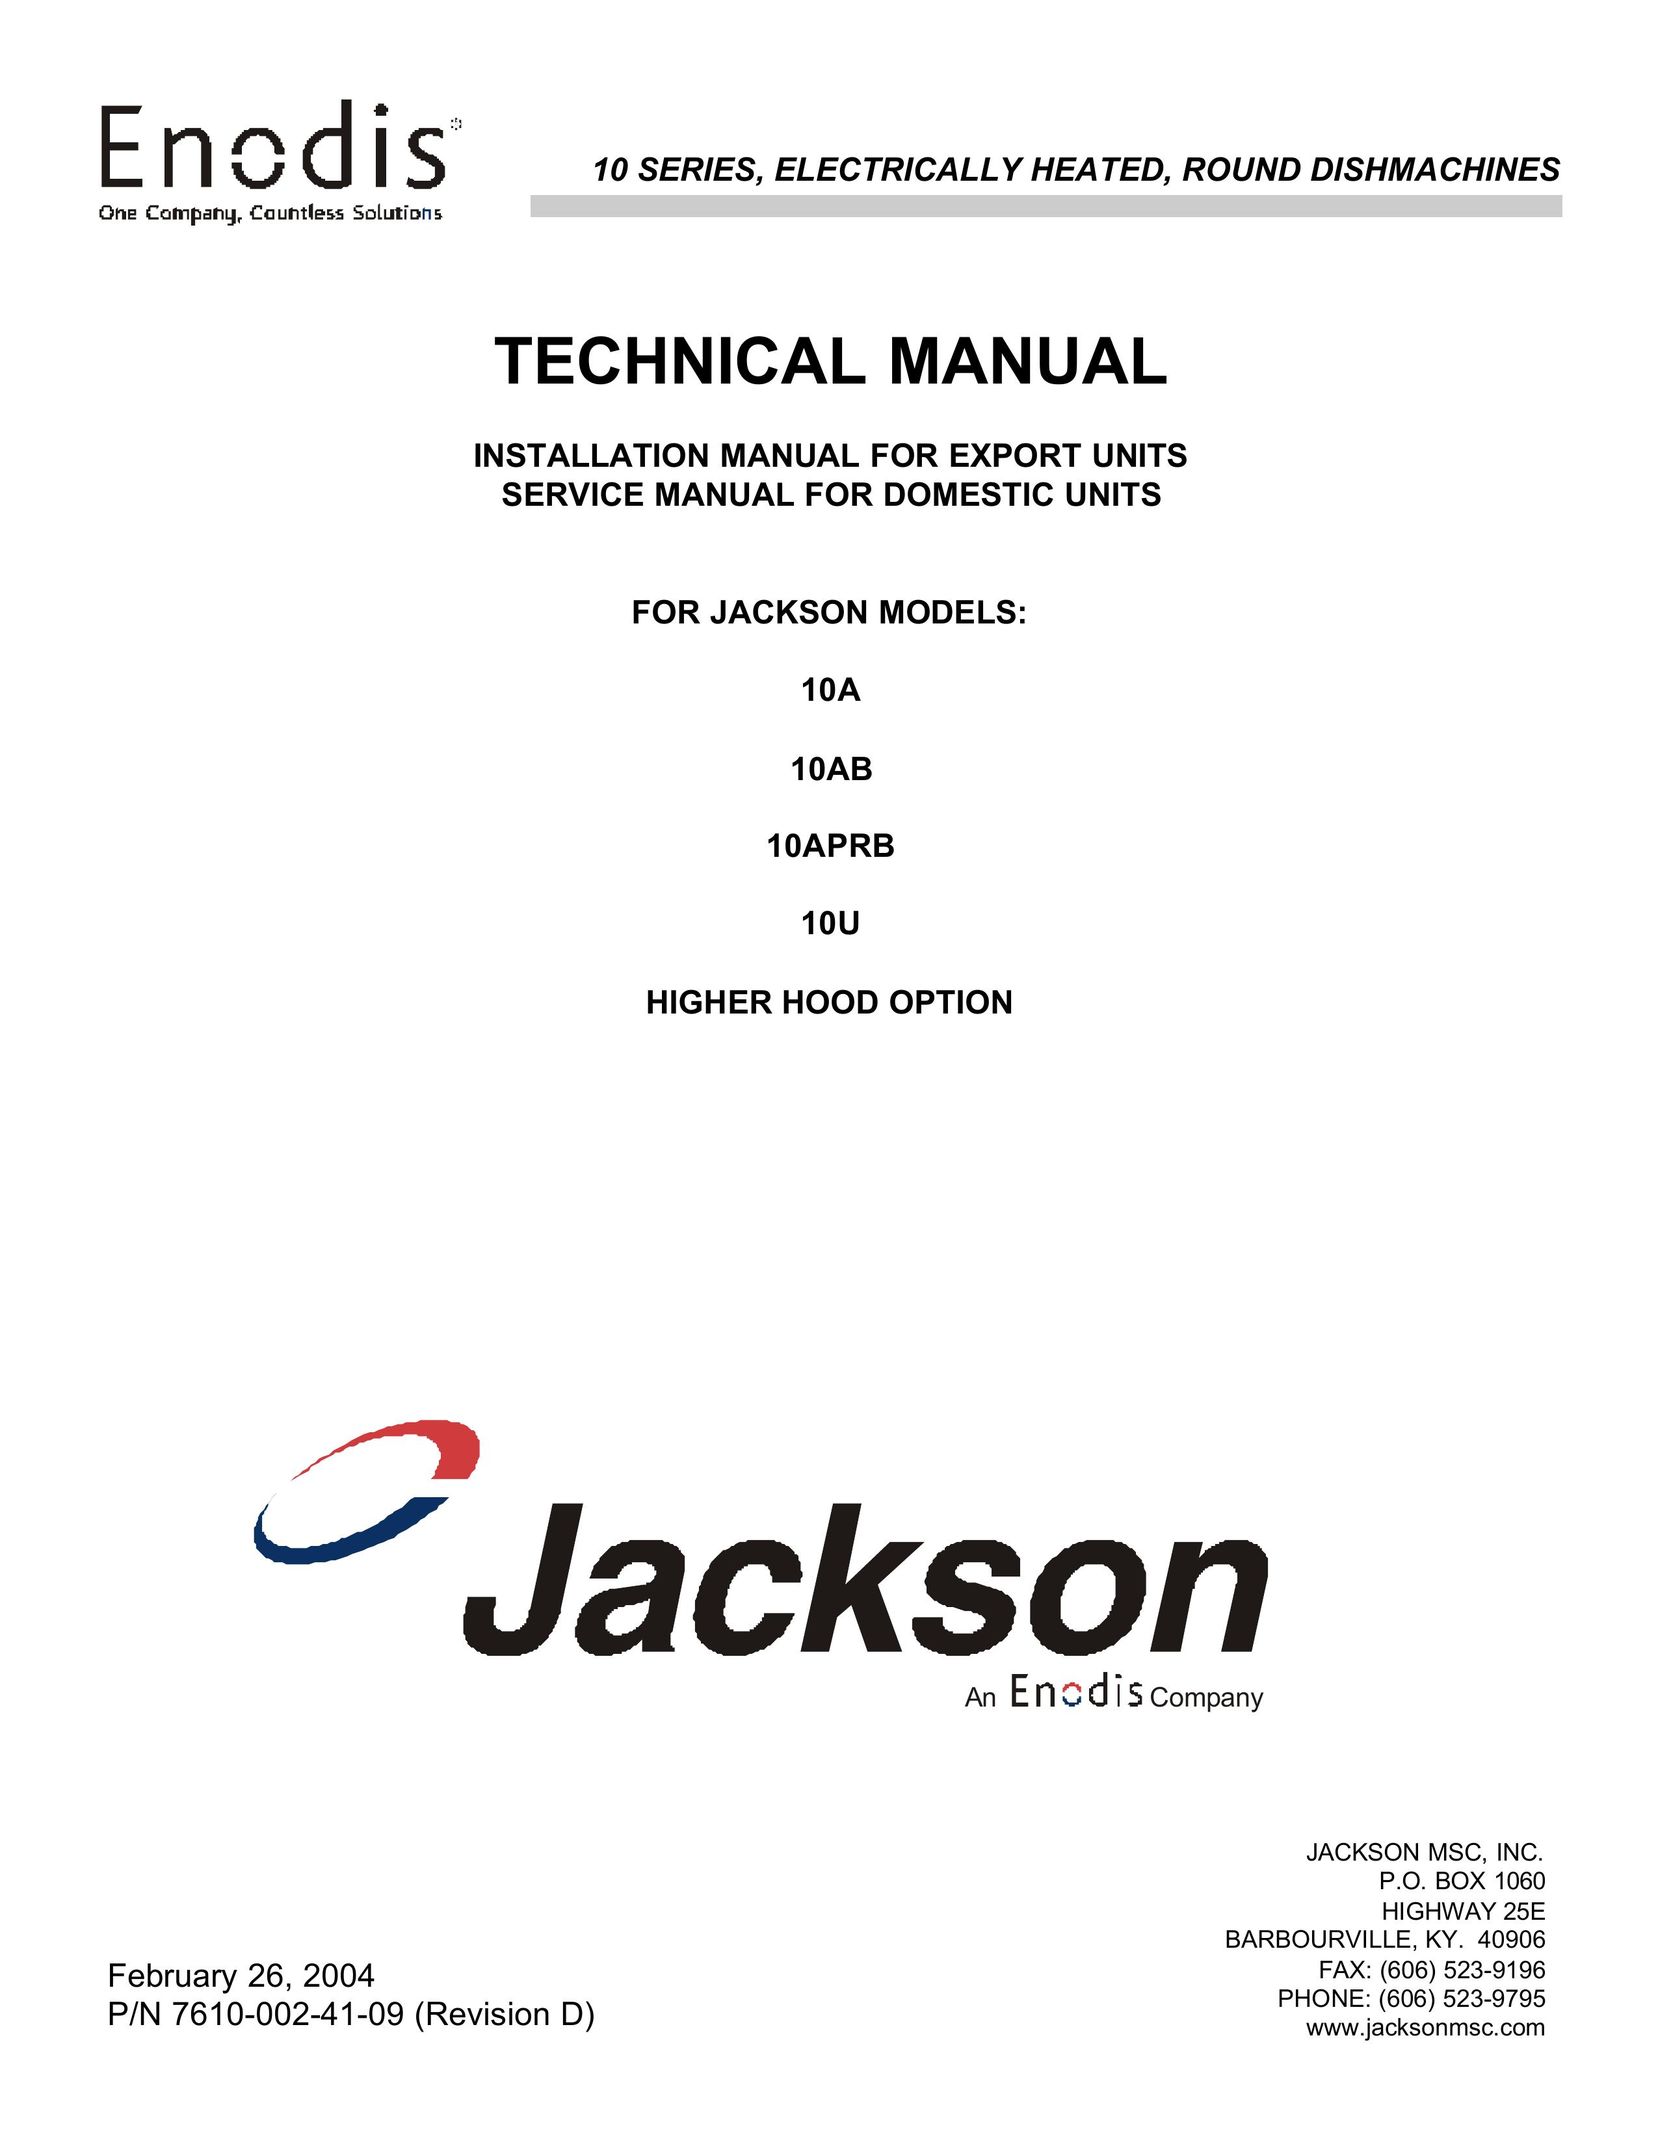 Jackson 10U Dishwasher User Manual